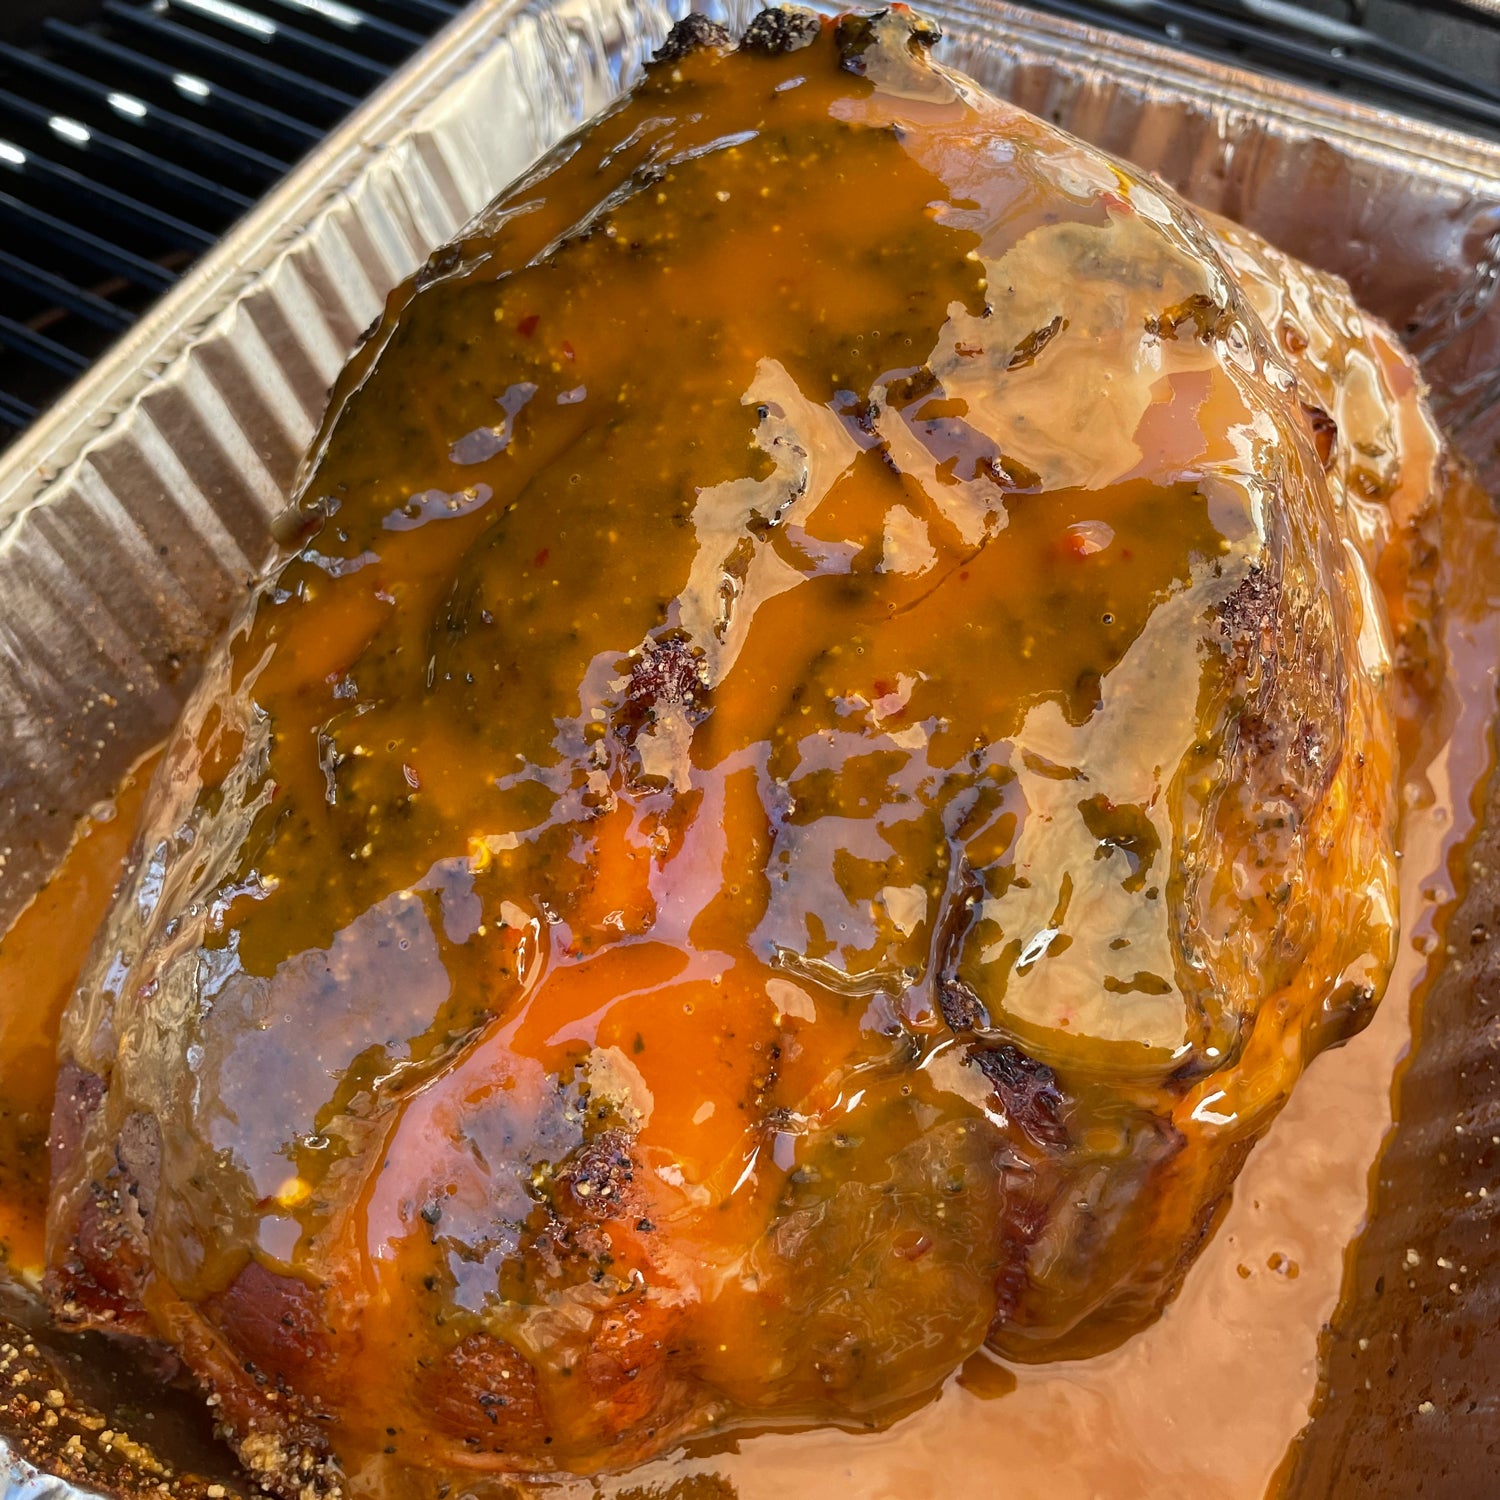 Smoked ham on the grill with a carolina mustard glaze